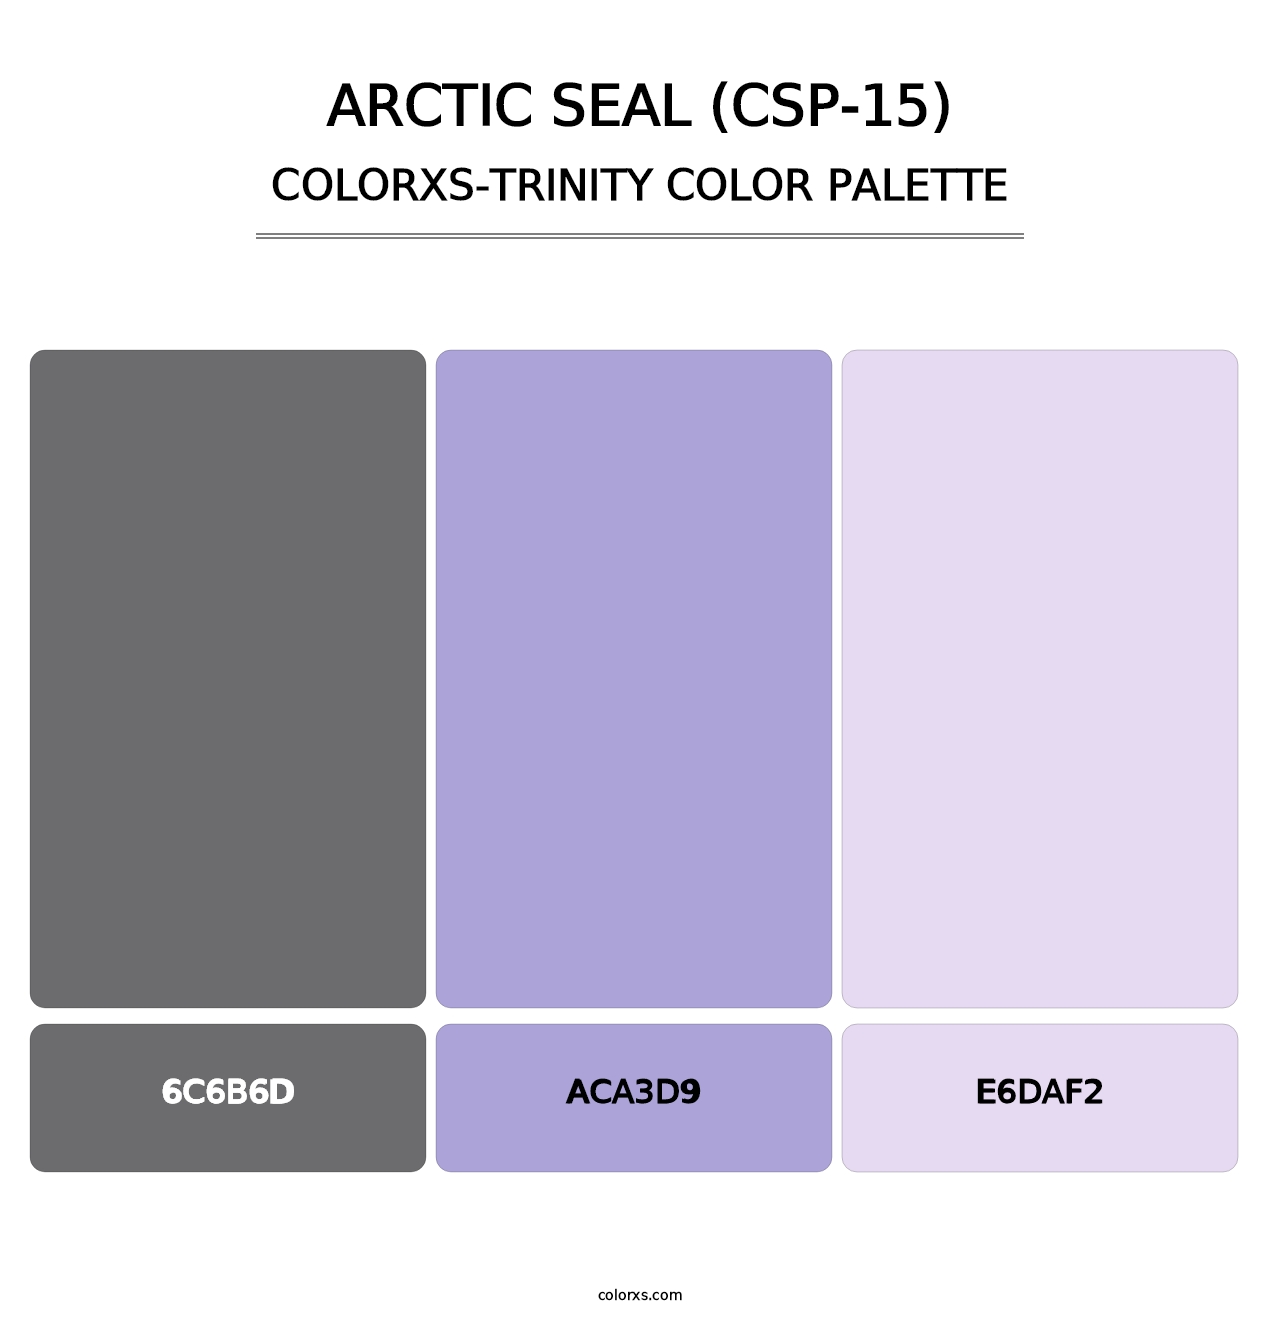 Arctic Seal (CSP-15) - Colorxs Trinity Palette